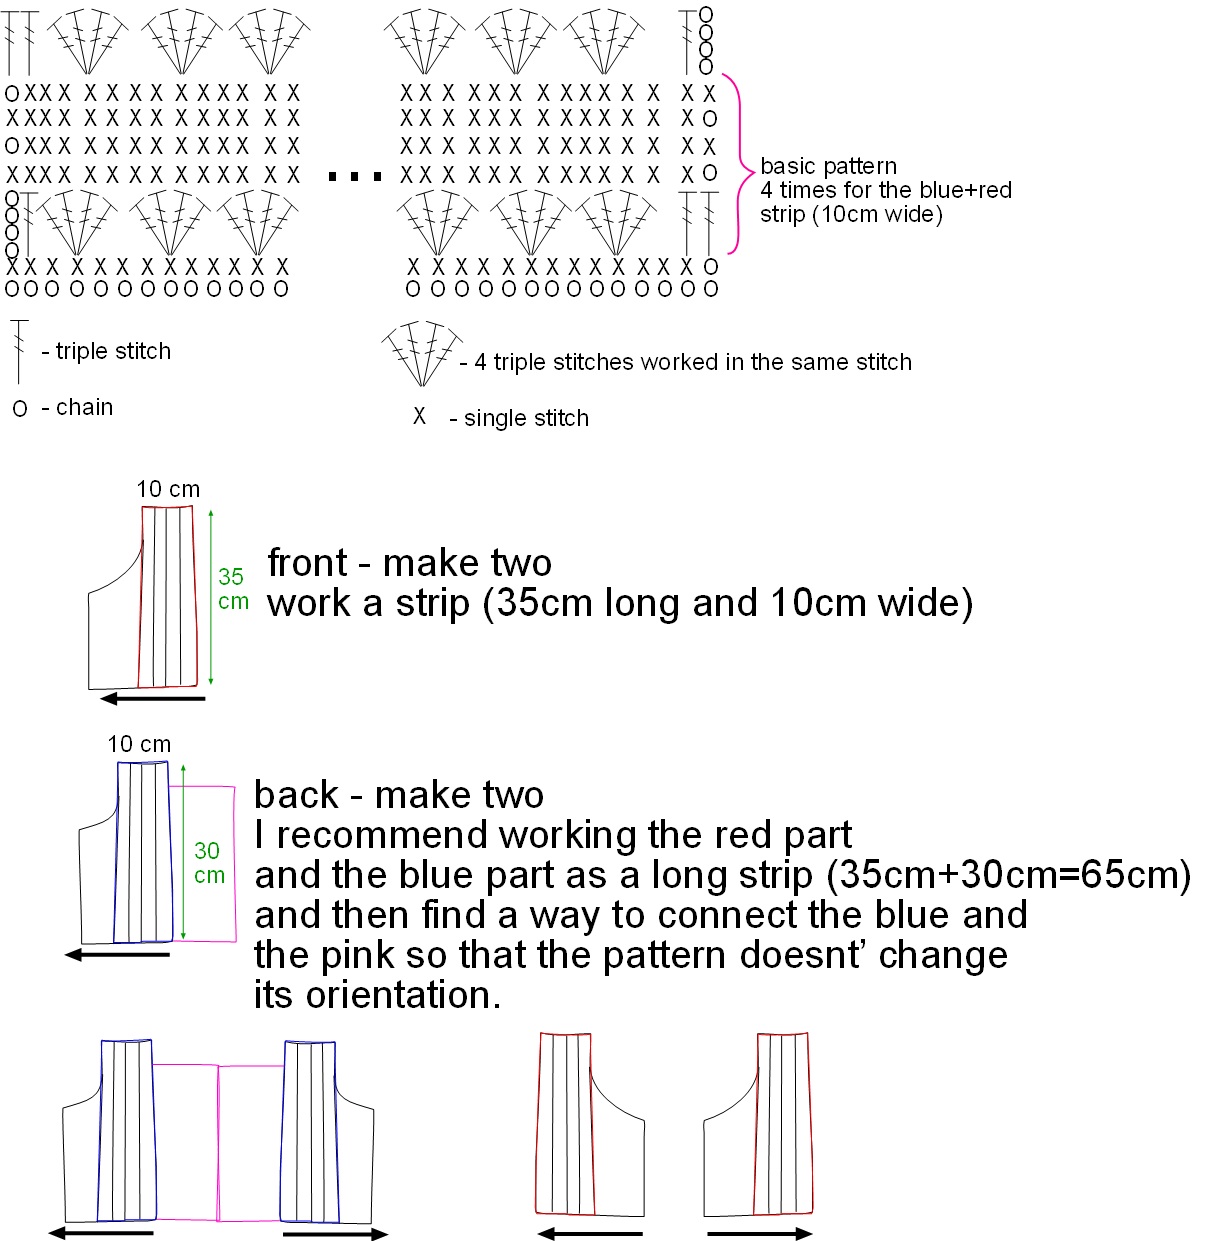 HASS DESIGN CROCHET - Crochet Patterns and Classes